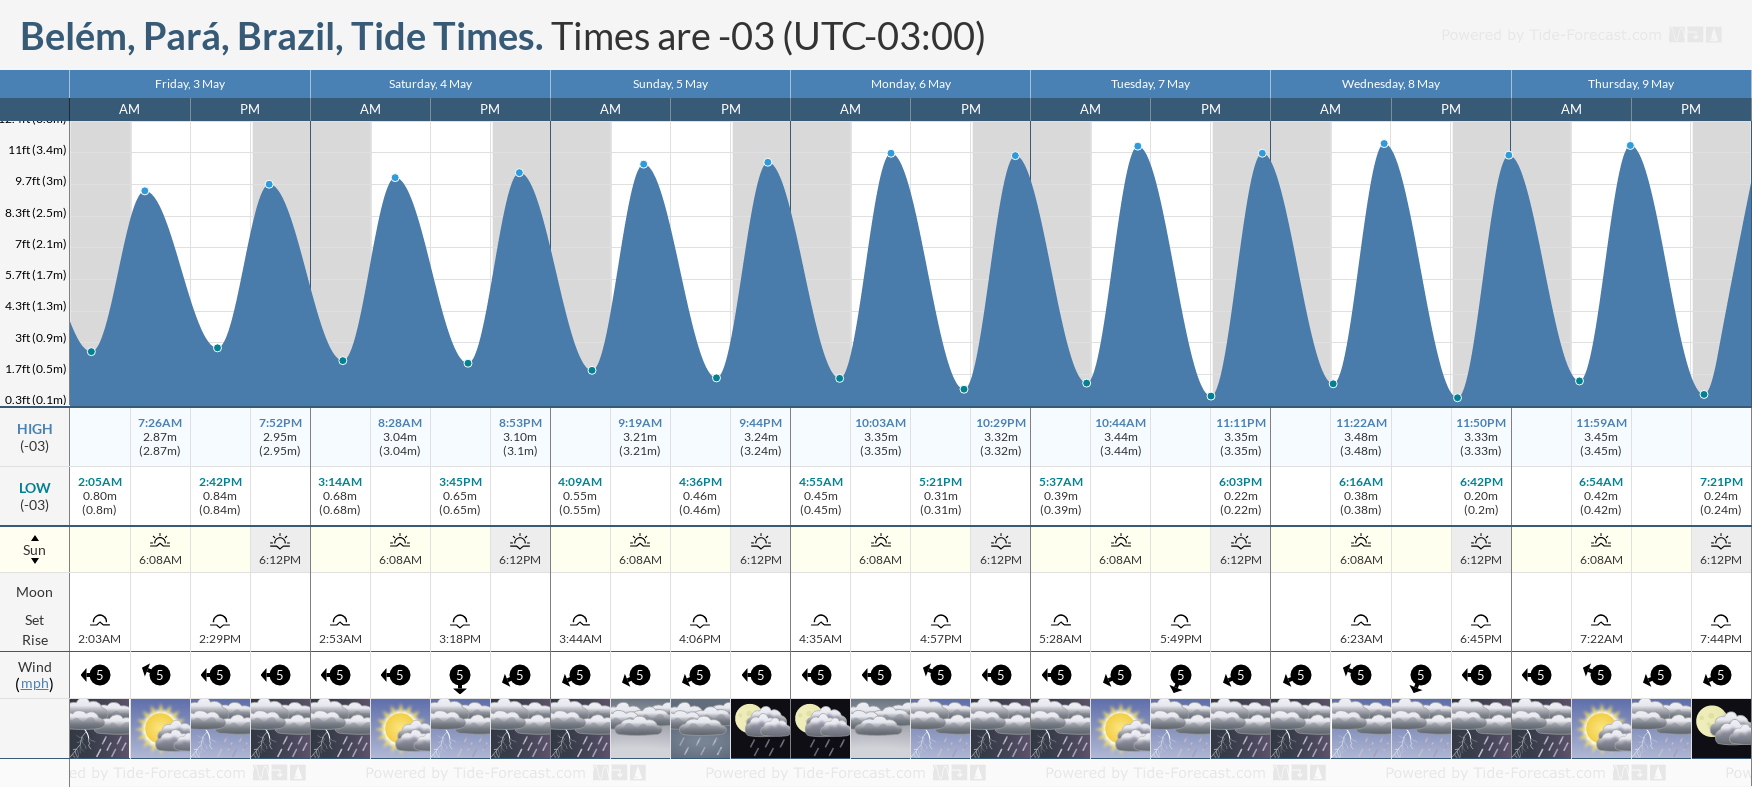 Belém, Pará, Brazil Tide Chart including high and low tide tide times for the next 7 days